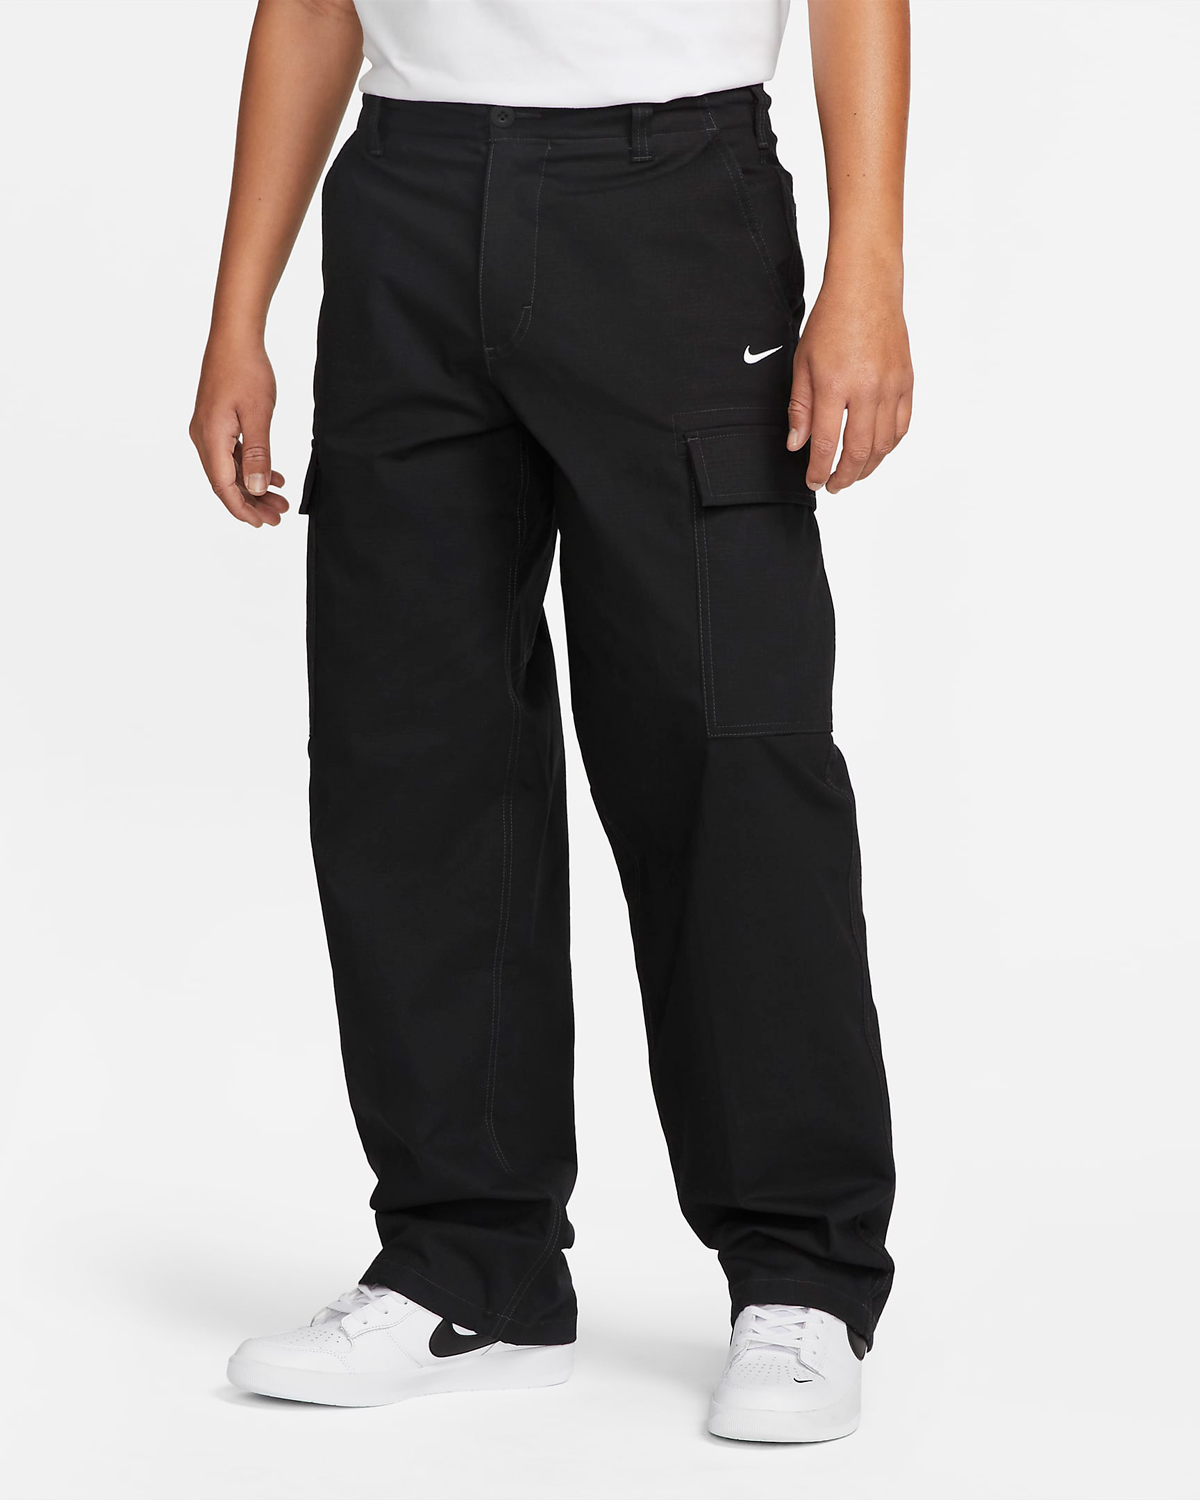 Nike-SB-Kearny-Skate-Cargo-Pants-Black-White